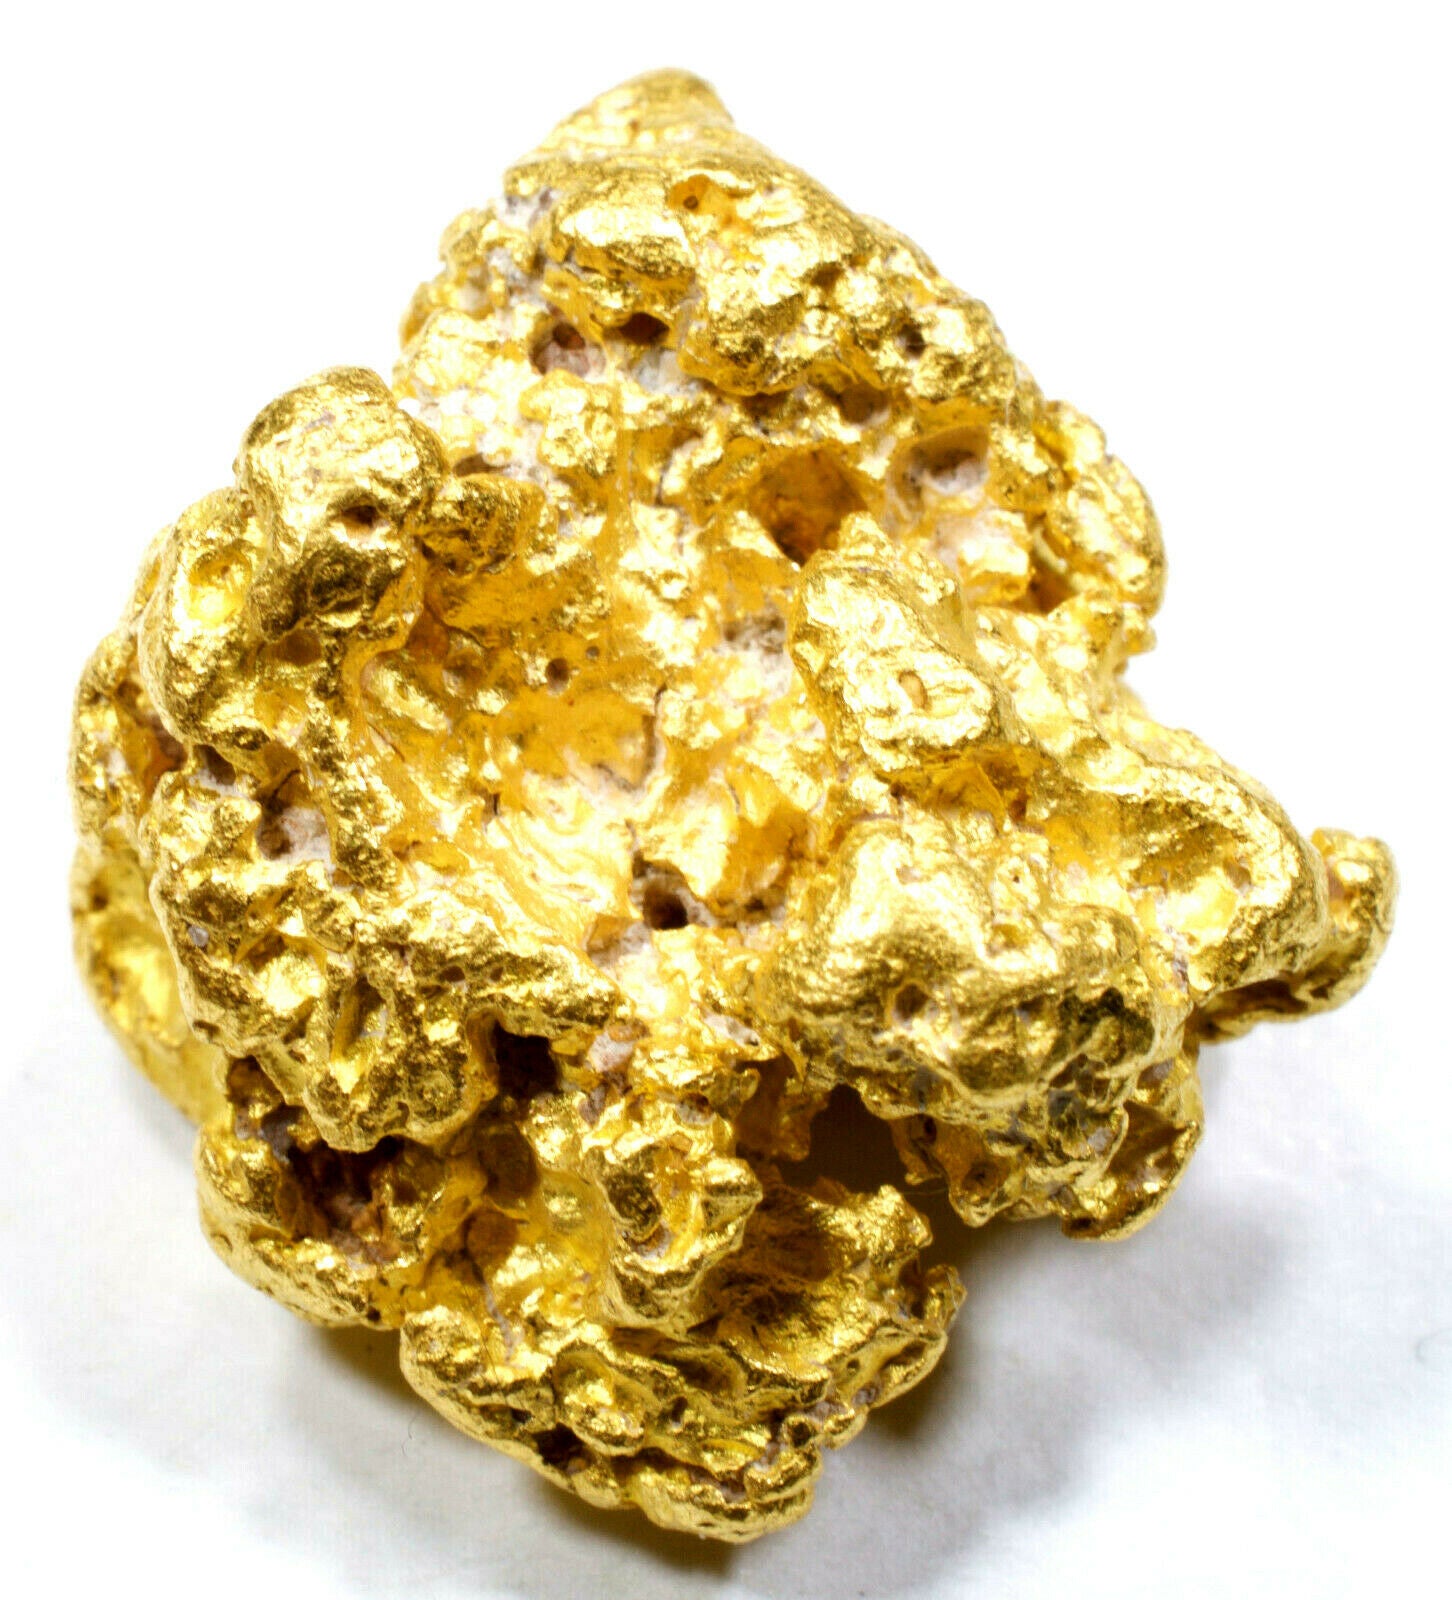 14.187 GRAMS AUSTRALIAN NATURAL PURE GOLD NUGGET GENUINE 94-98% PURE (#AU800) A GRADE - Liquidbullion